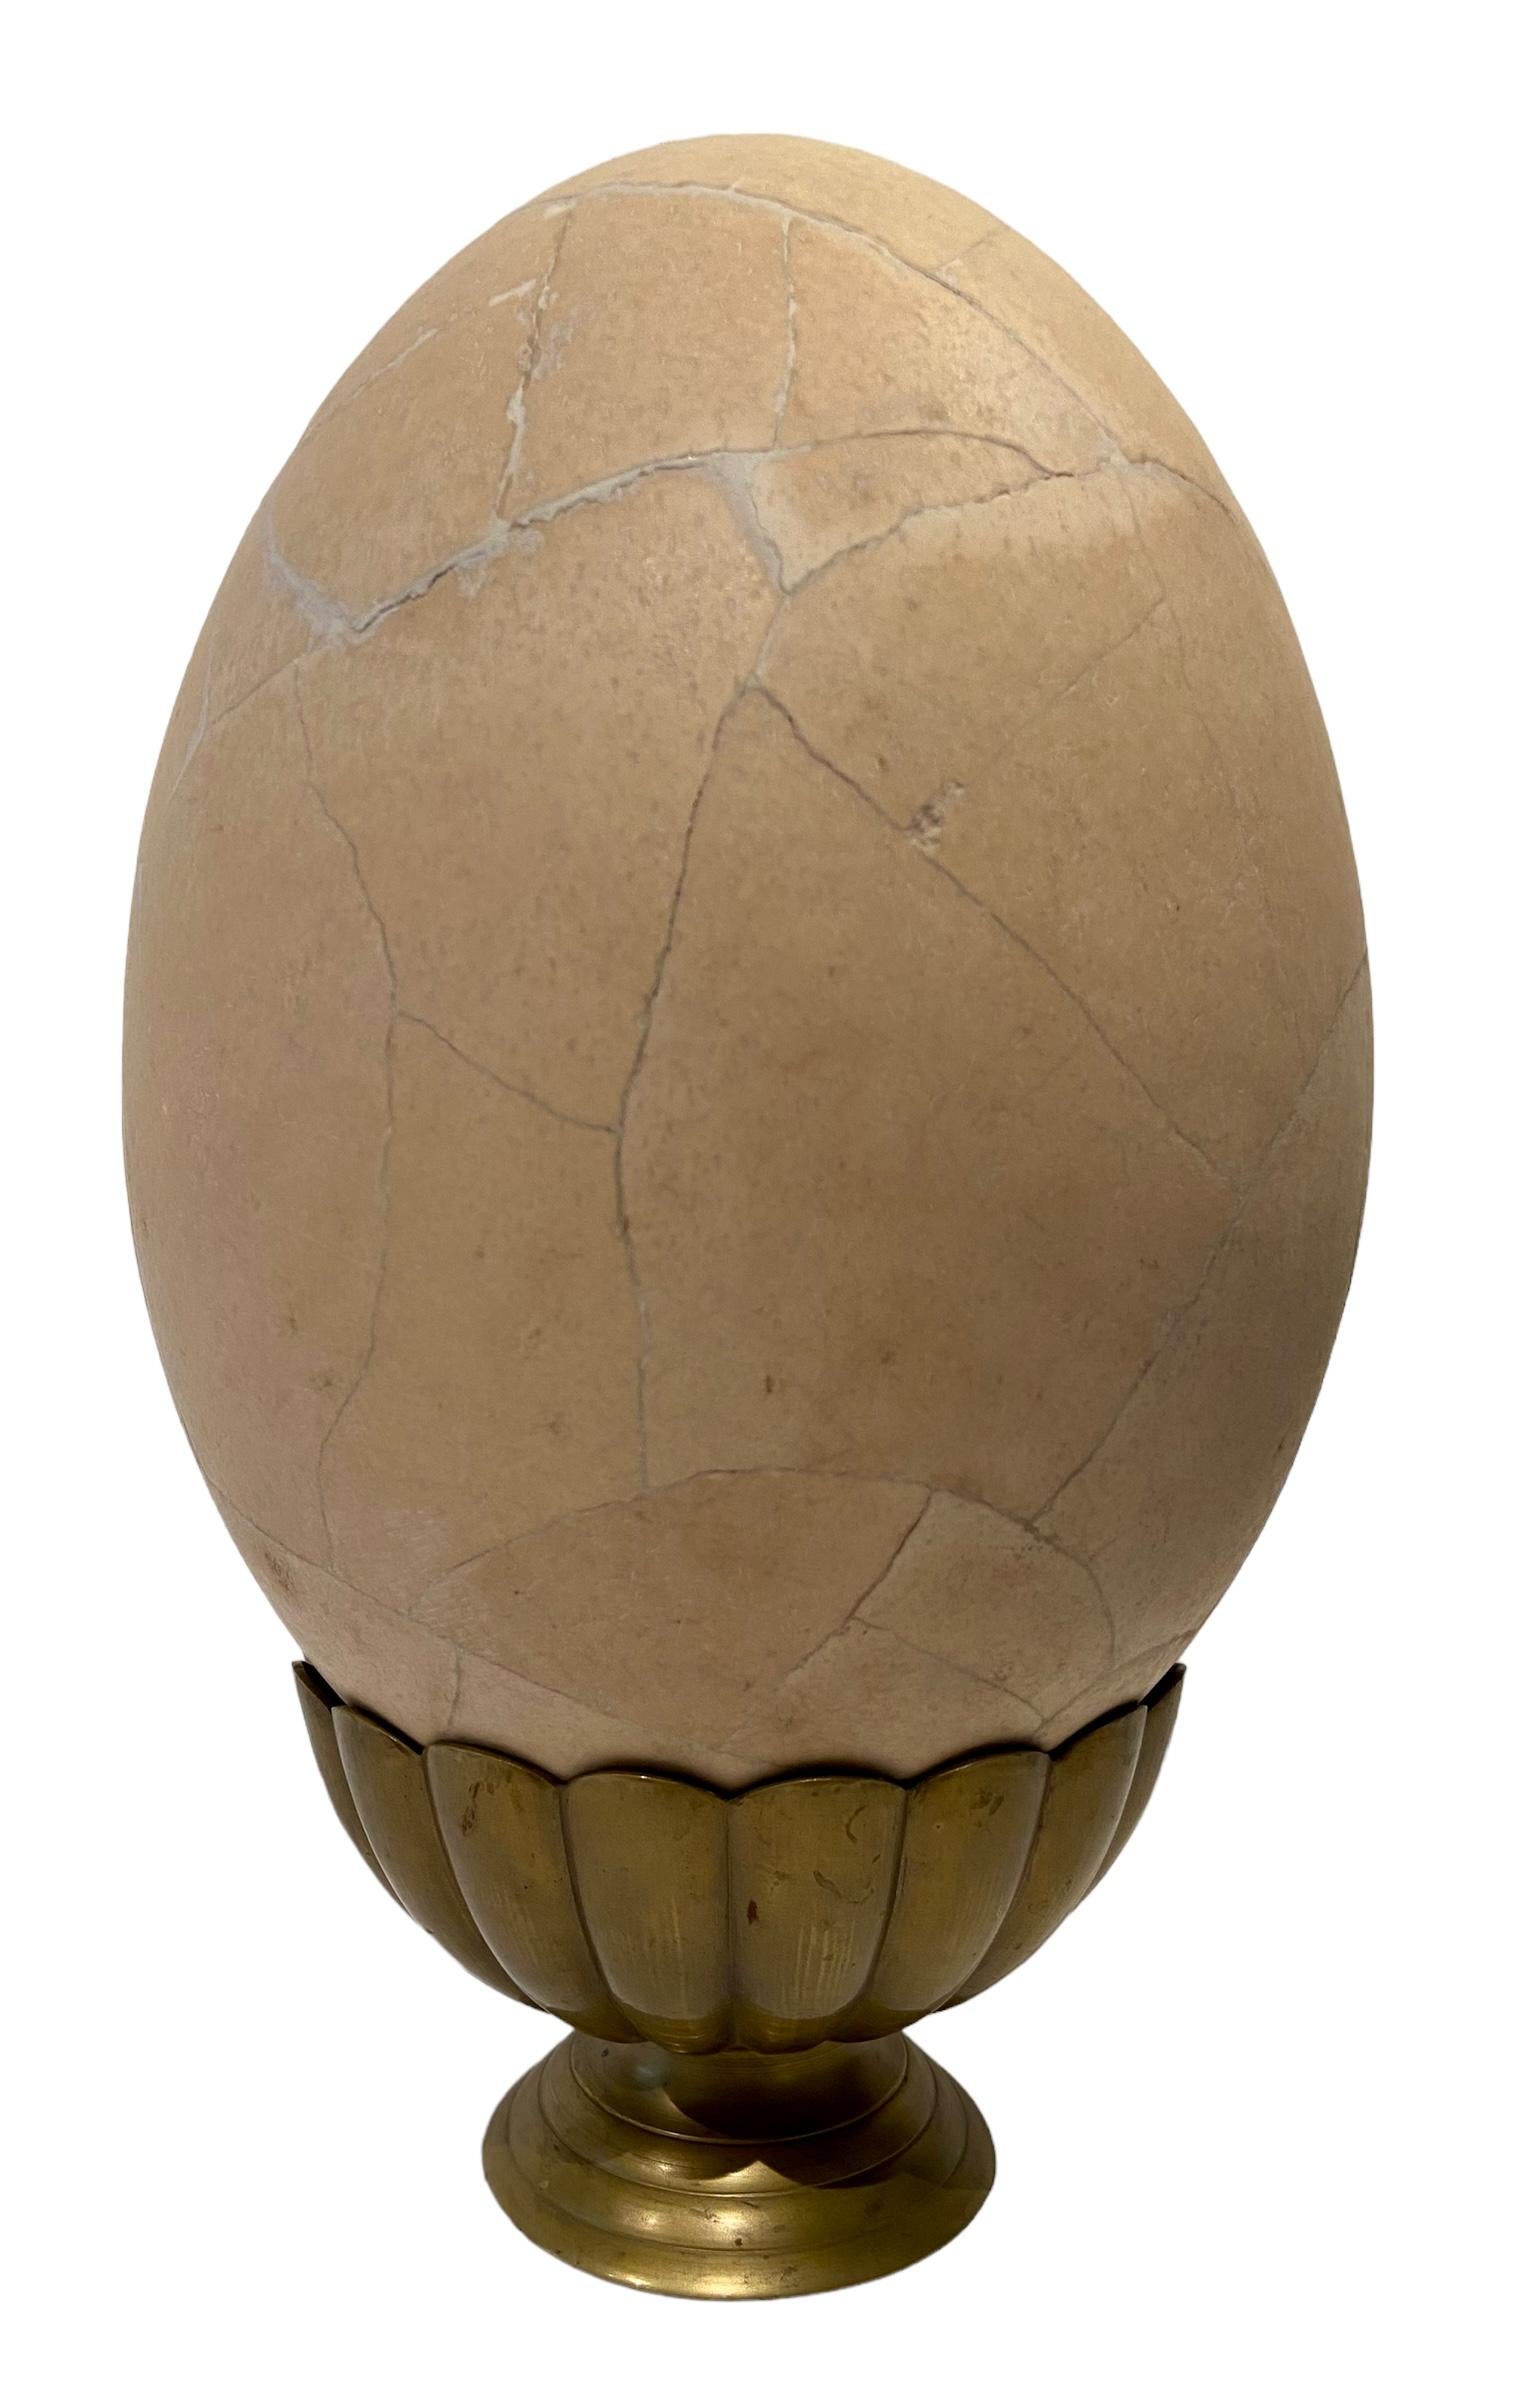 Medieval Elephant bird egg